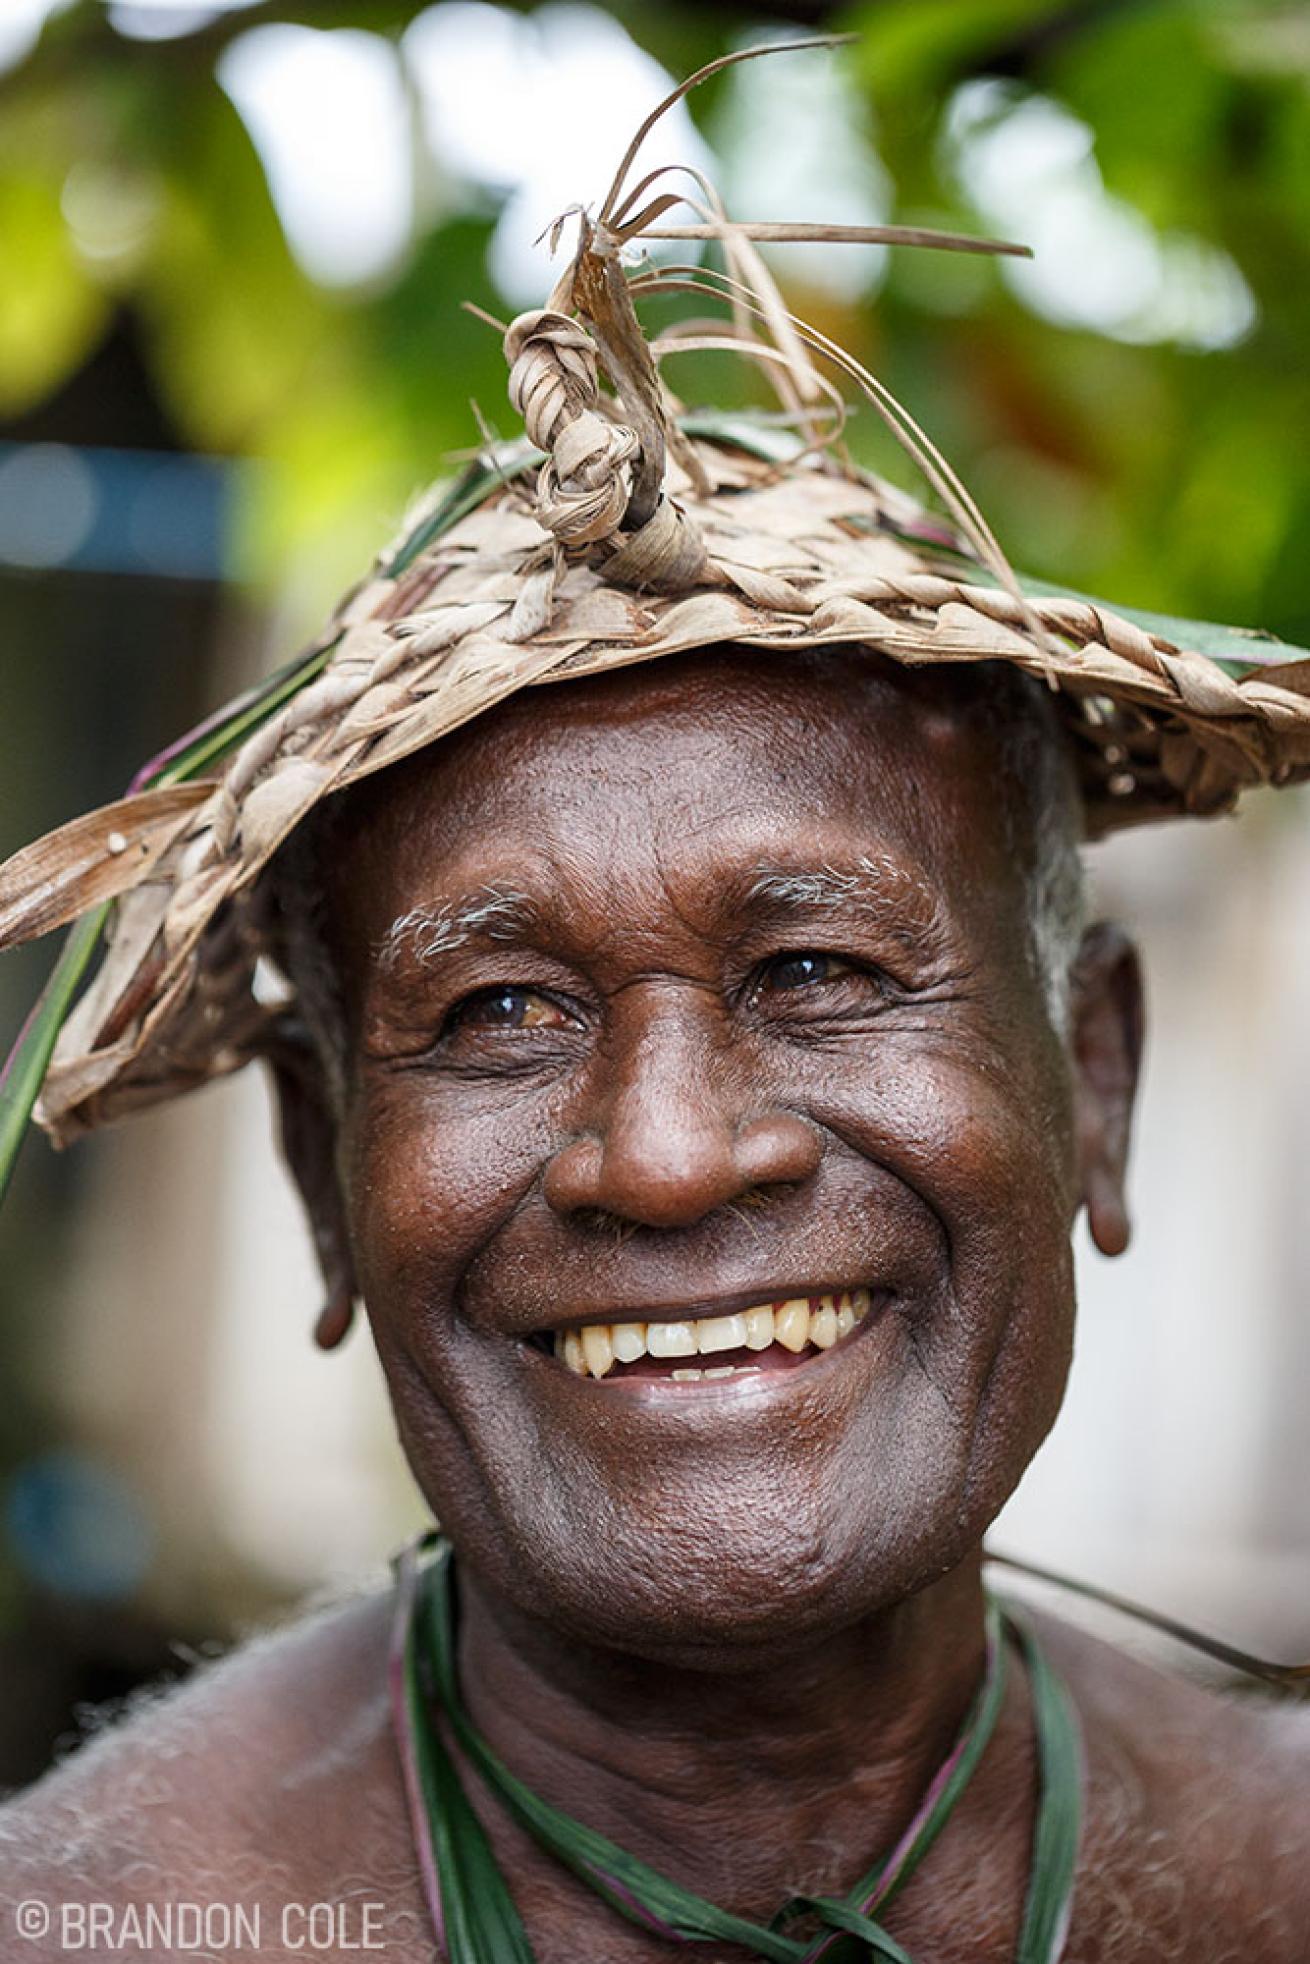 Solomon Islands Villager from Ughele